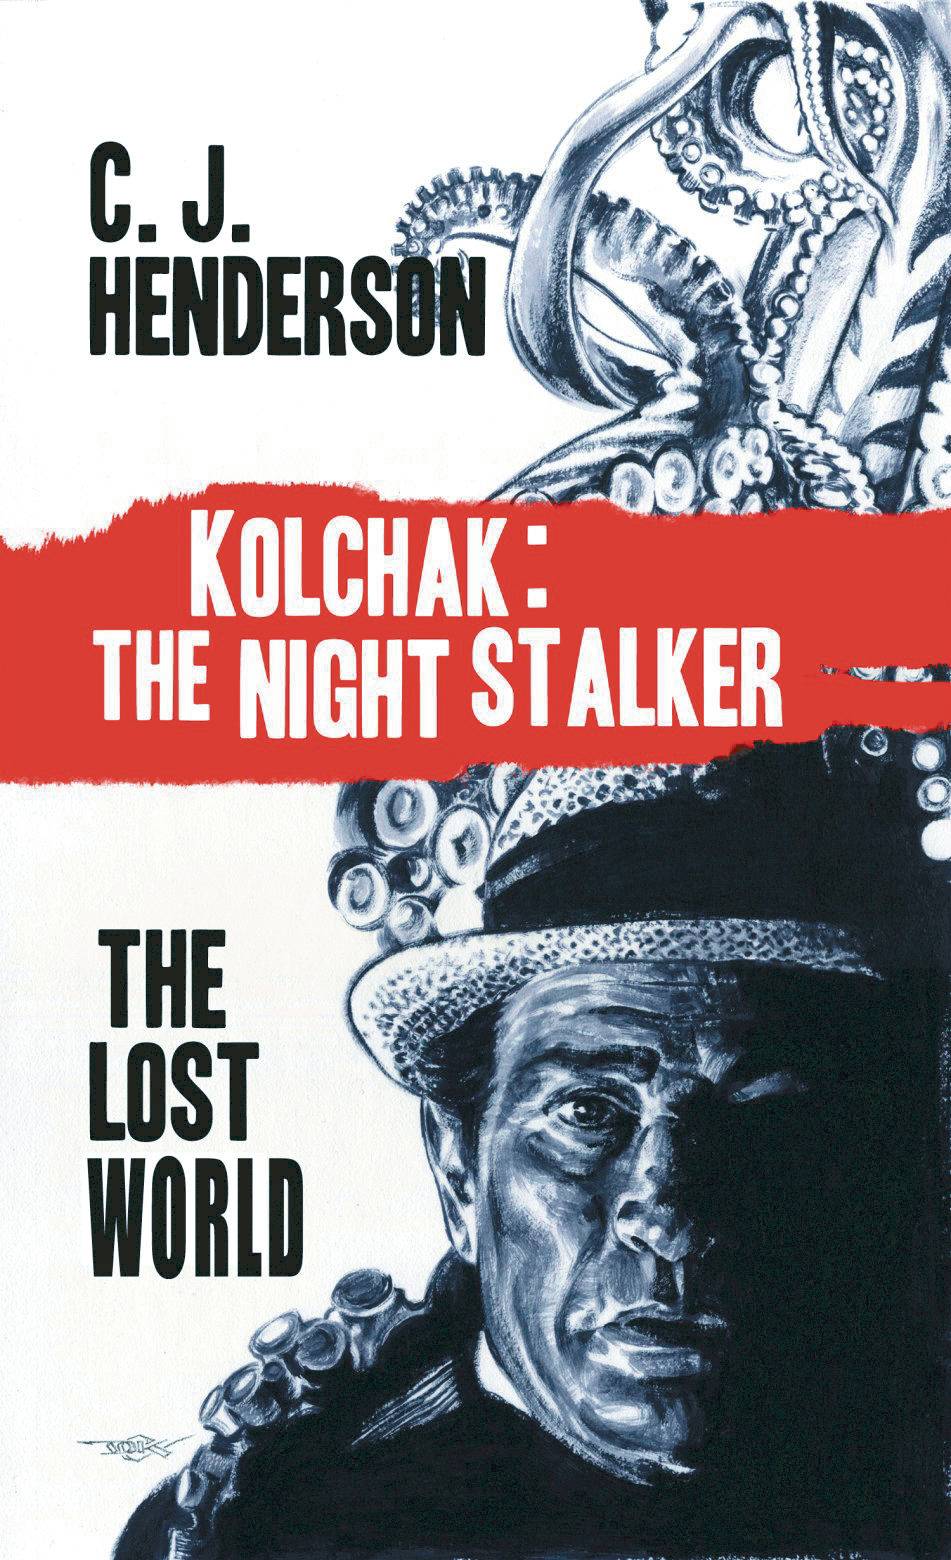 KOLCHAK AND LOST WORLD NOVEL (PP #1017)